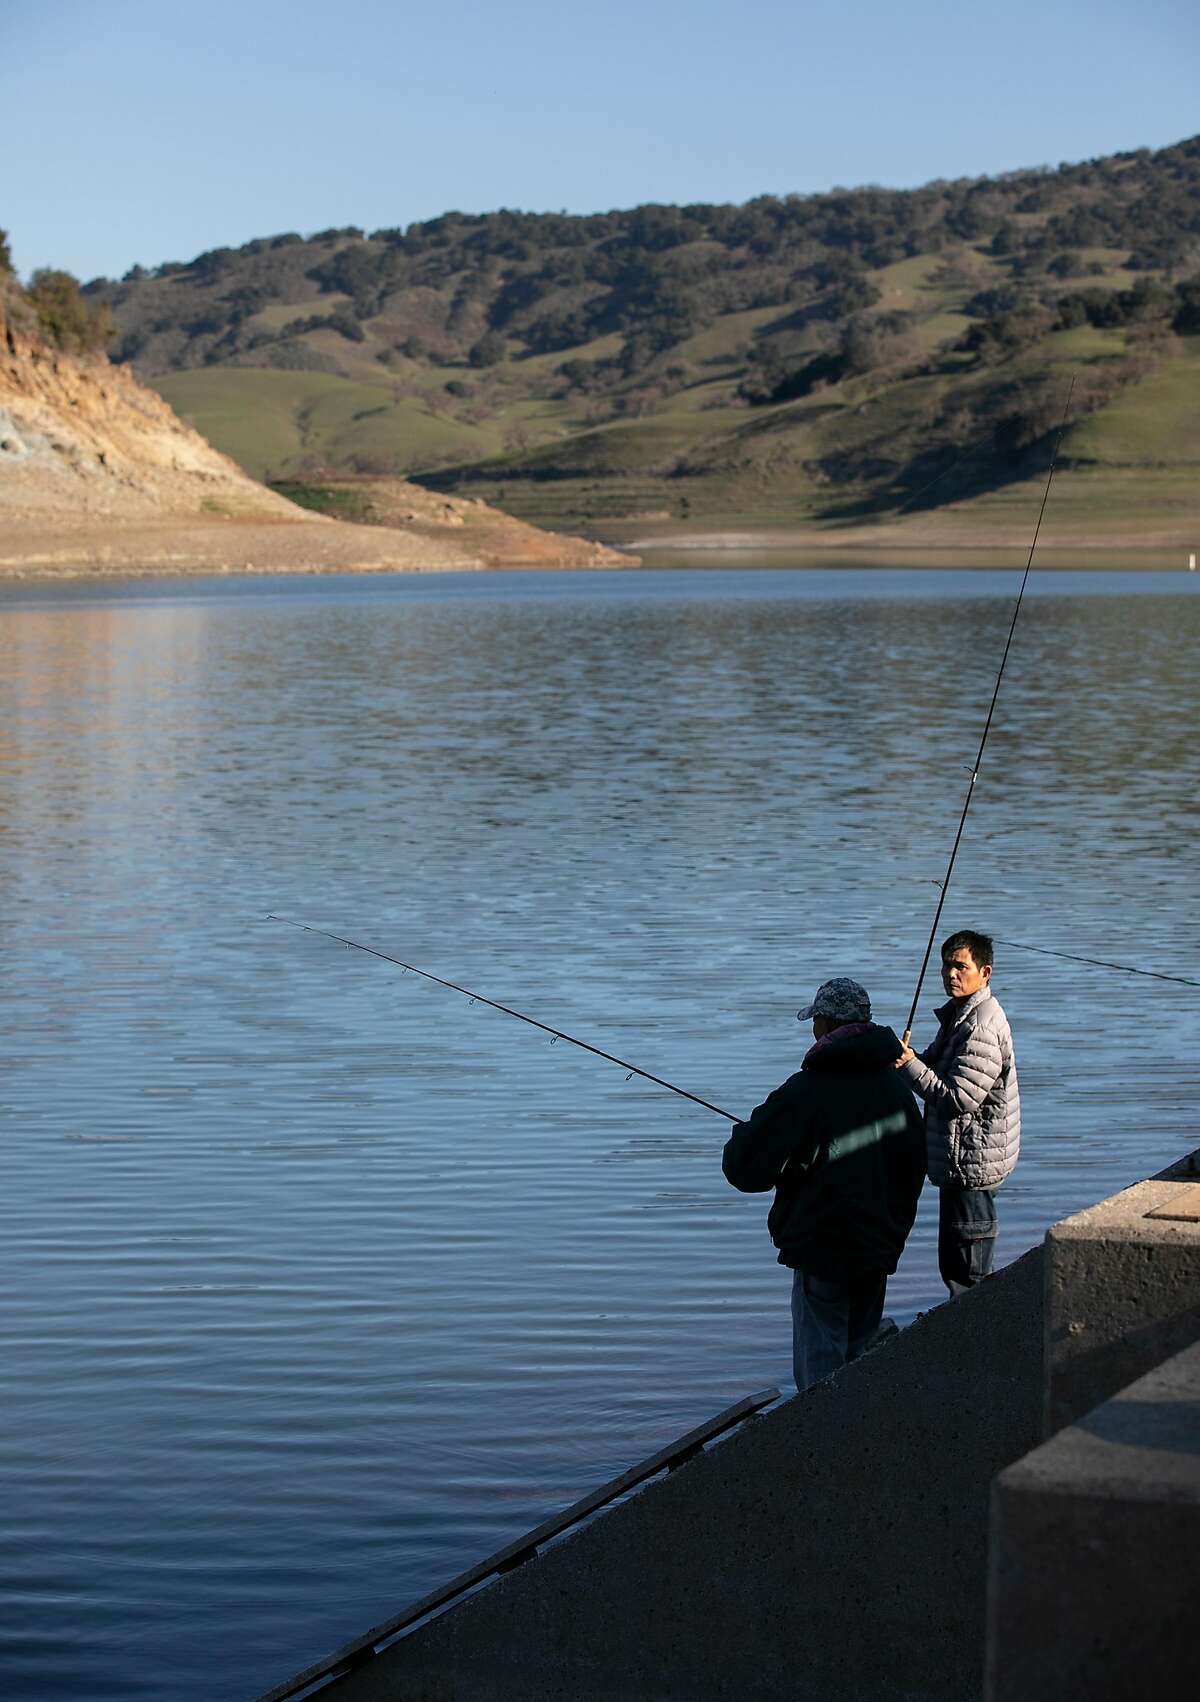 From right, Jiang and Hang of Morgan Hill, fish at Anderson Lake Reservoir on Tuesday, Feb. 25, 2020 in Morgan Hill, Calif.